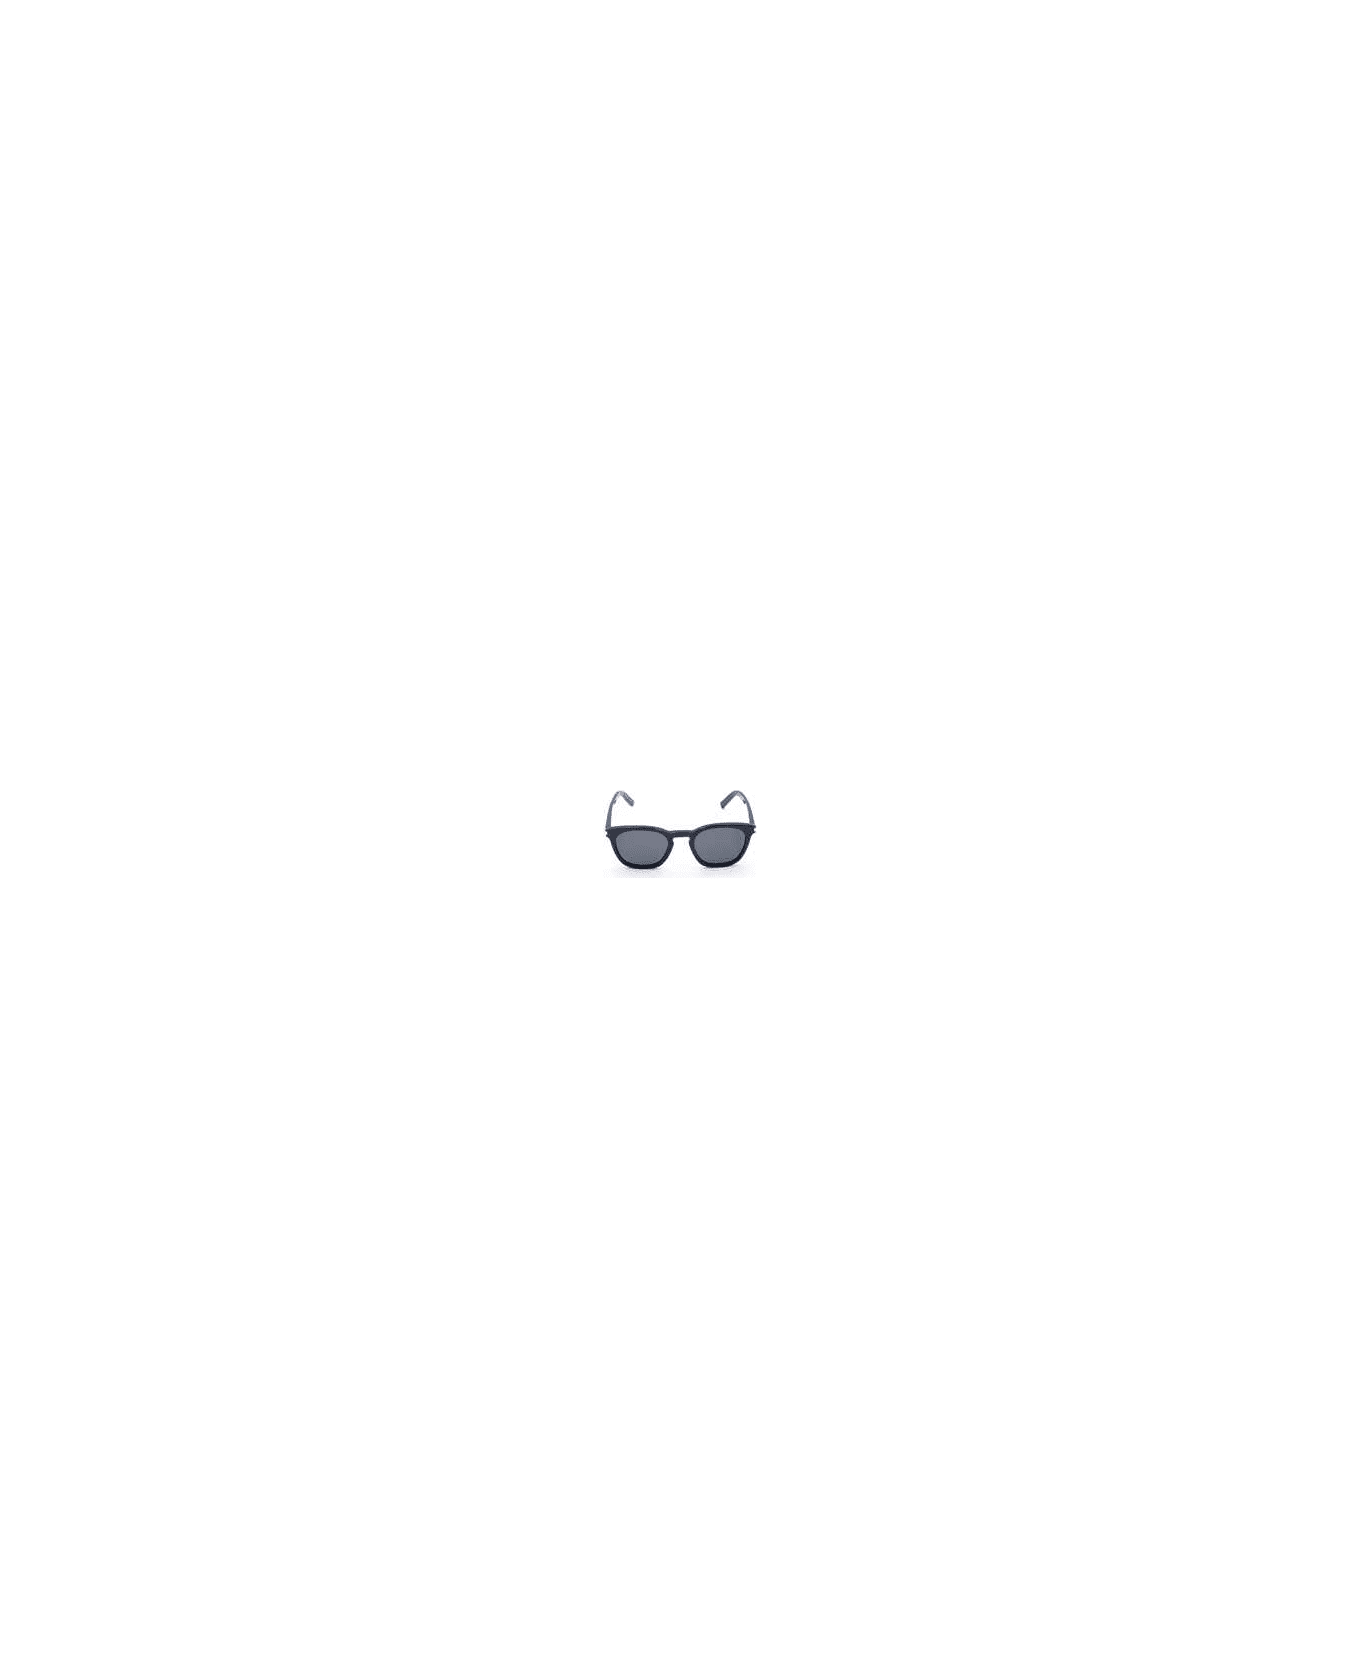 Saint Laurent Eyewear SL 28 Sunglasses - Black Black Smoke